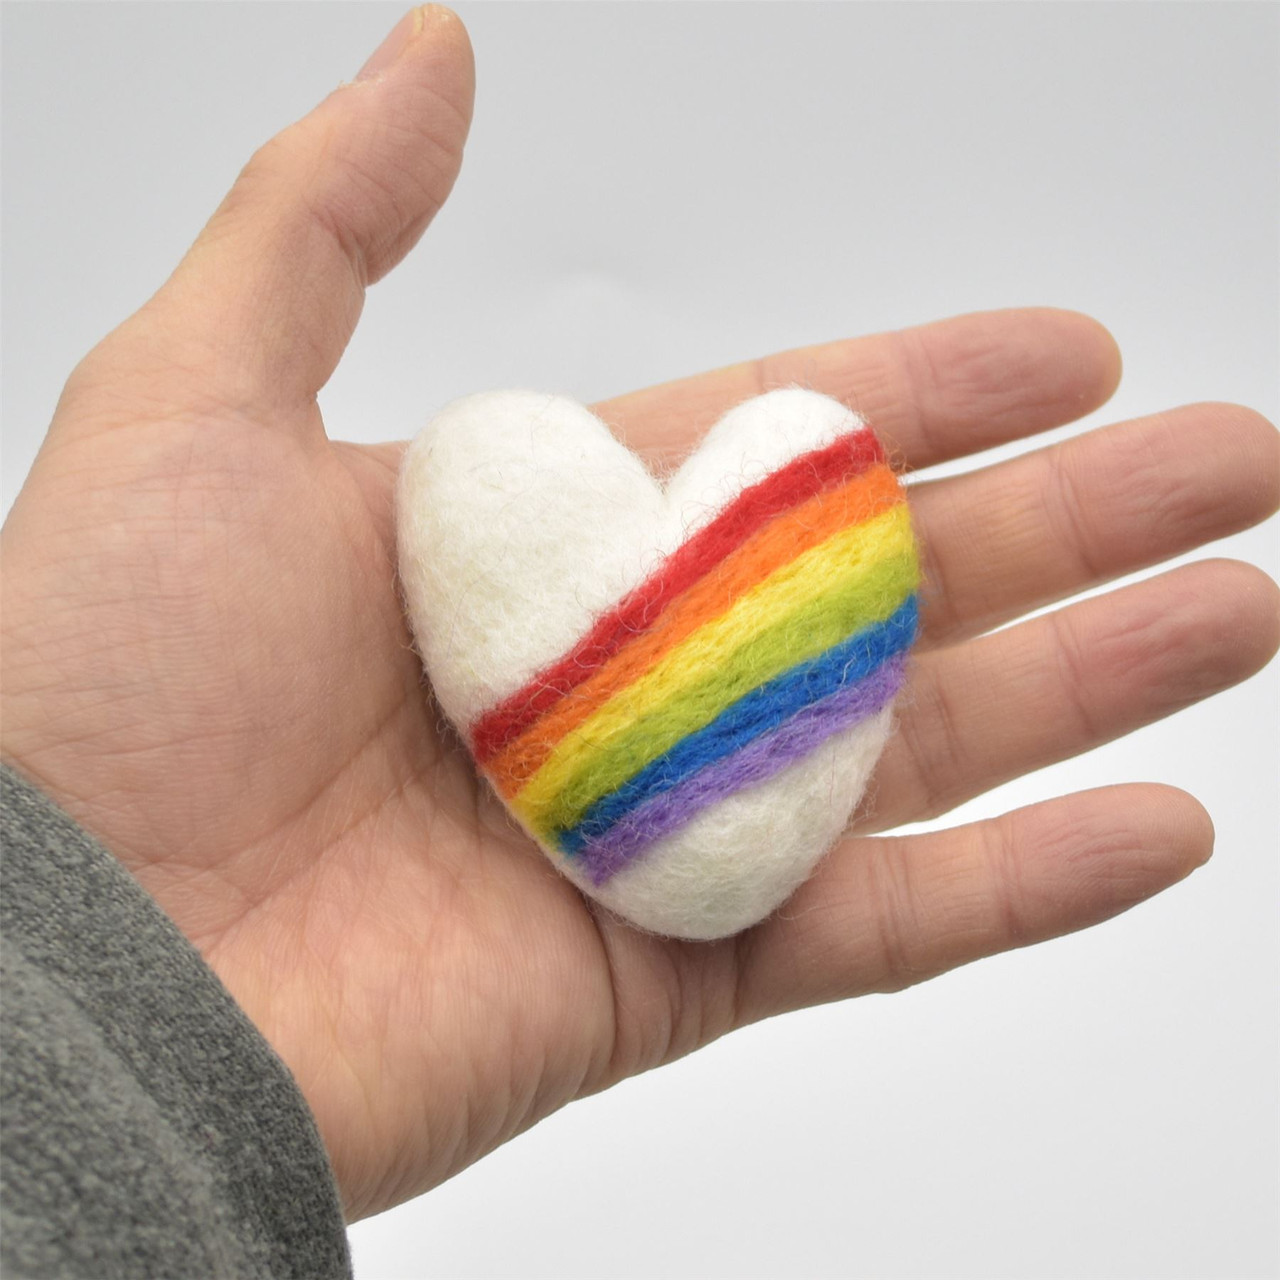 4-5cm Multicolor Felt Heart